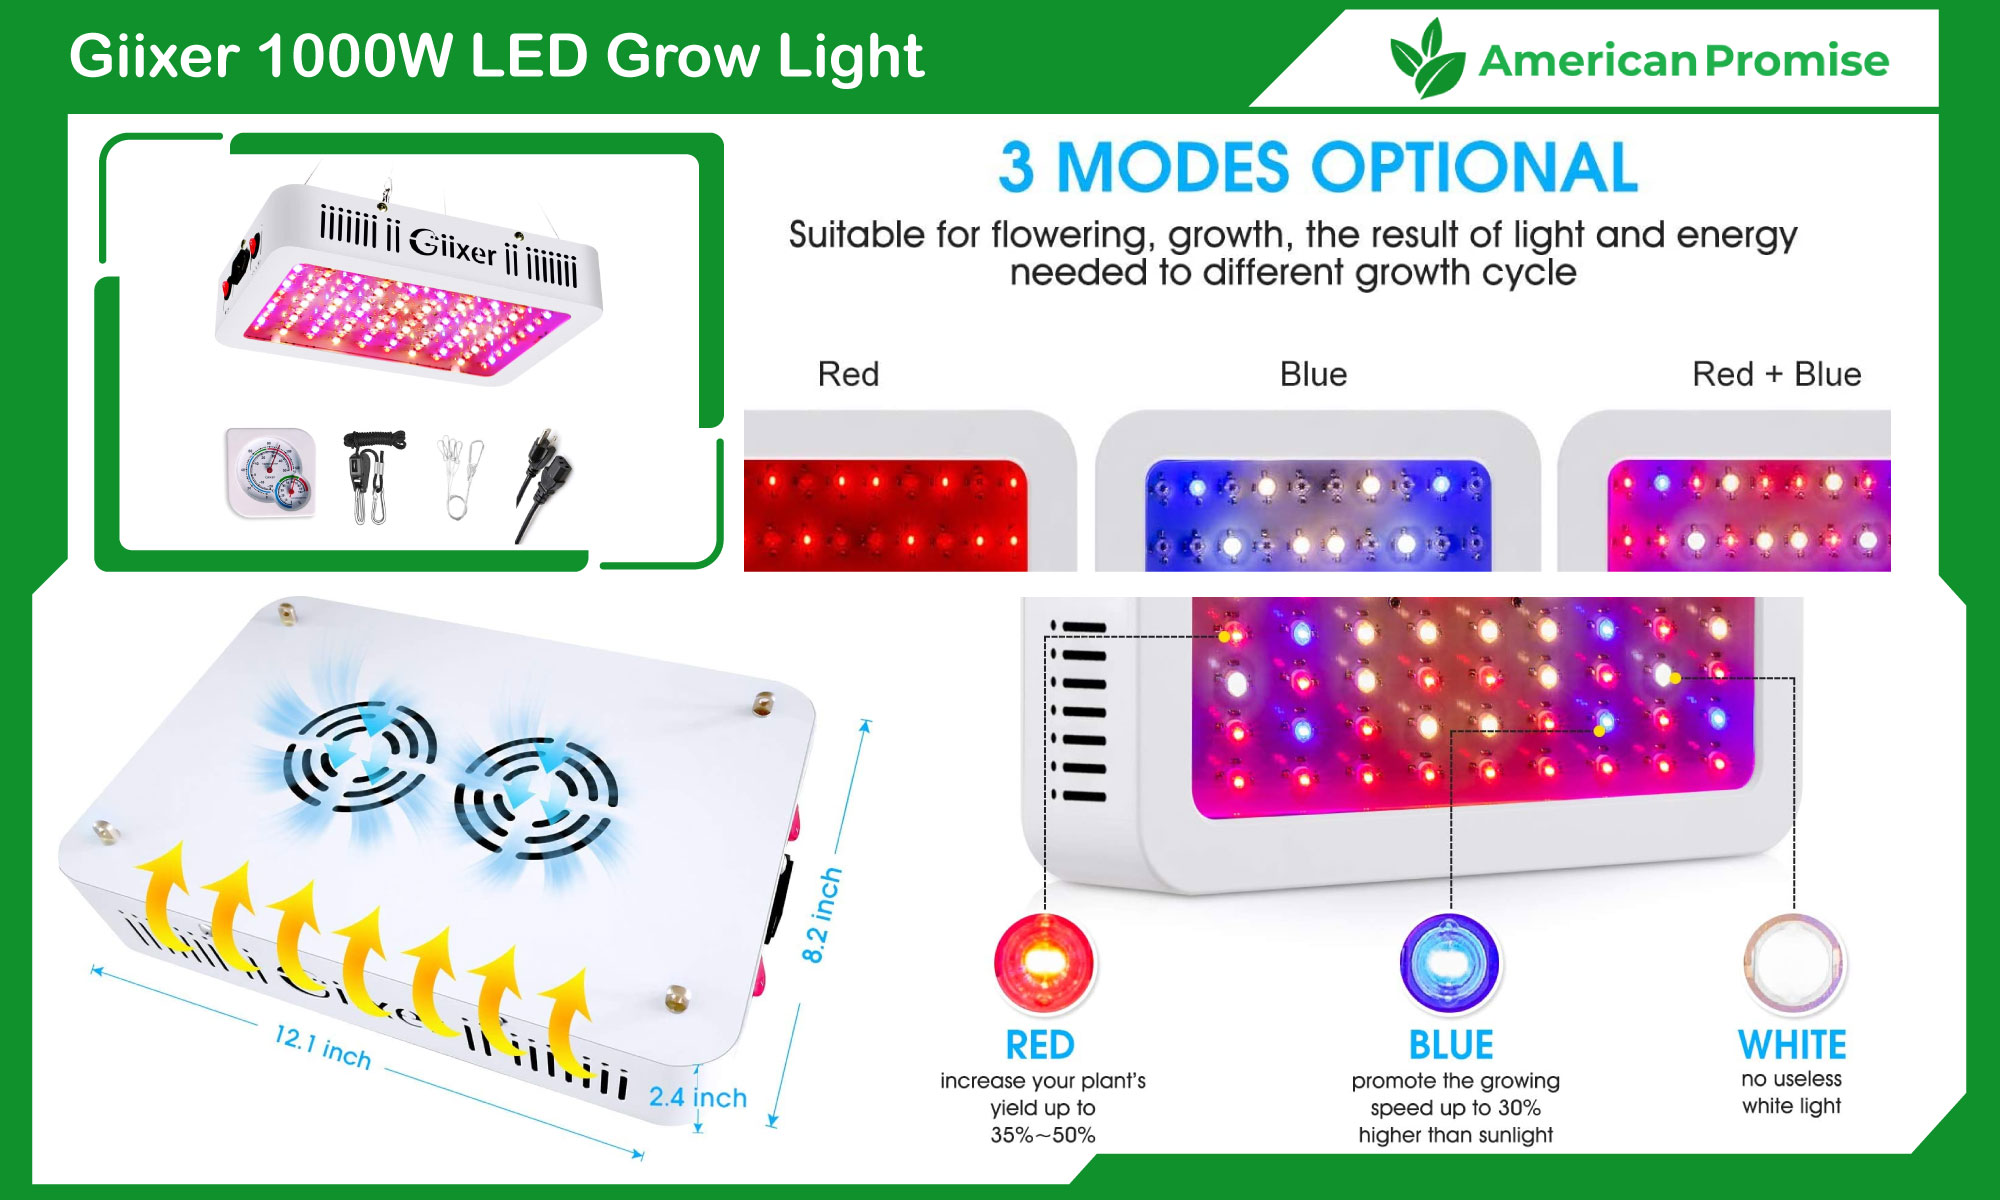 Giixer 1000W LED Grow Light